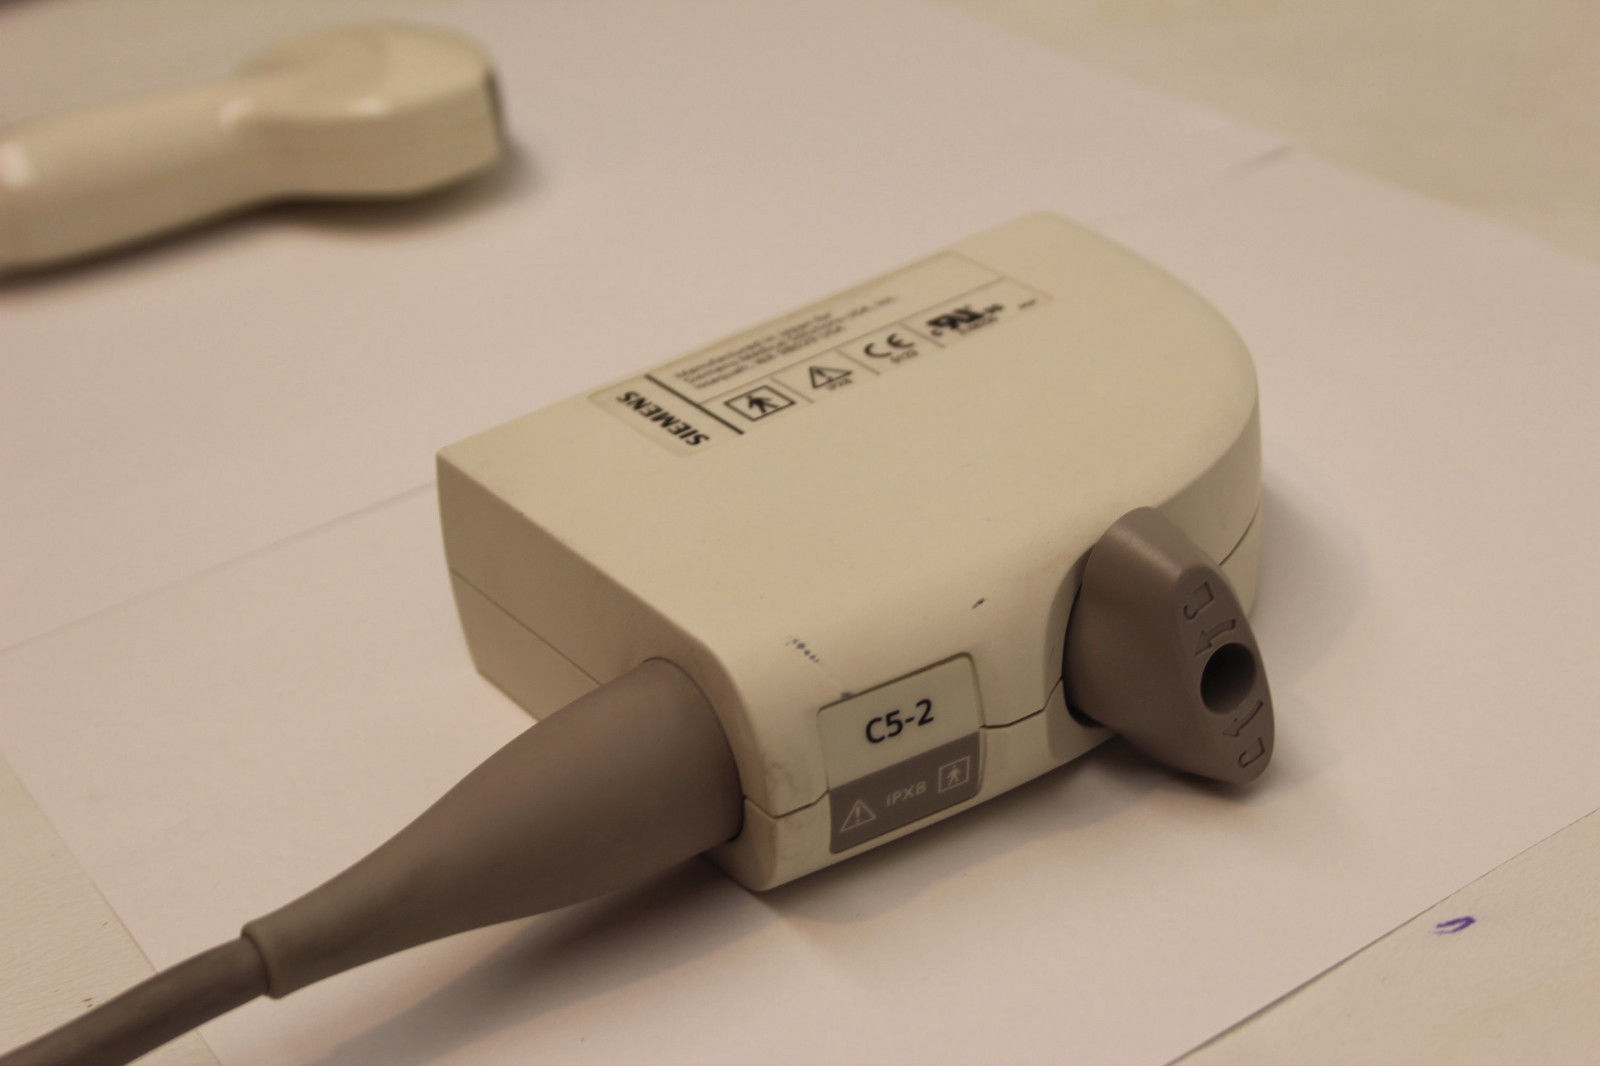 Siemens Ultrasound Probe c5-2 compatible with Siemens Sonoline Prima DIAGNOSTIC ULTRASOUND MACHINES FOR SALE